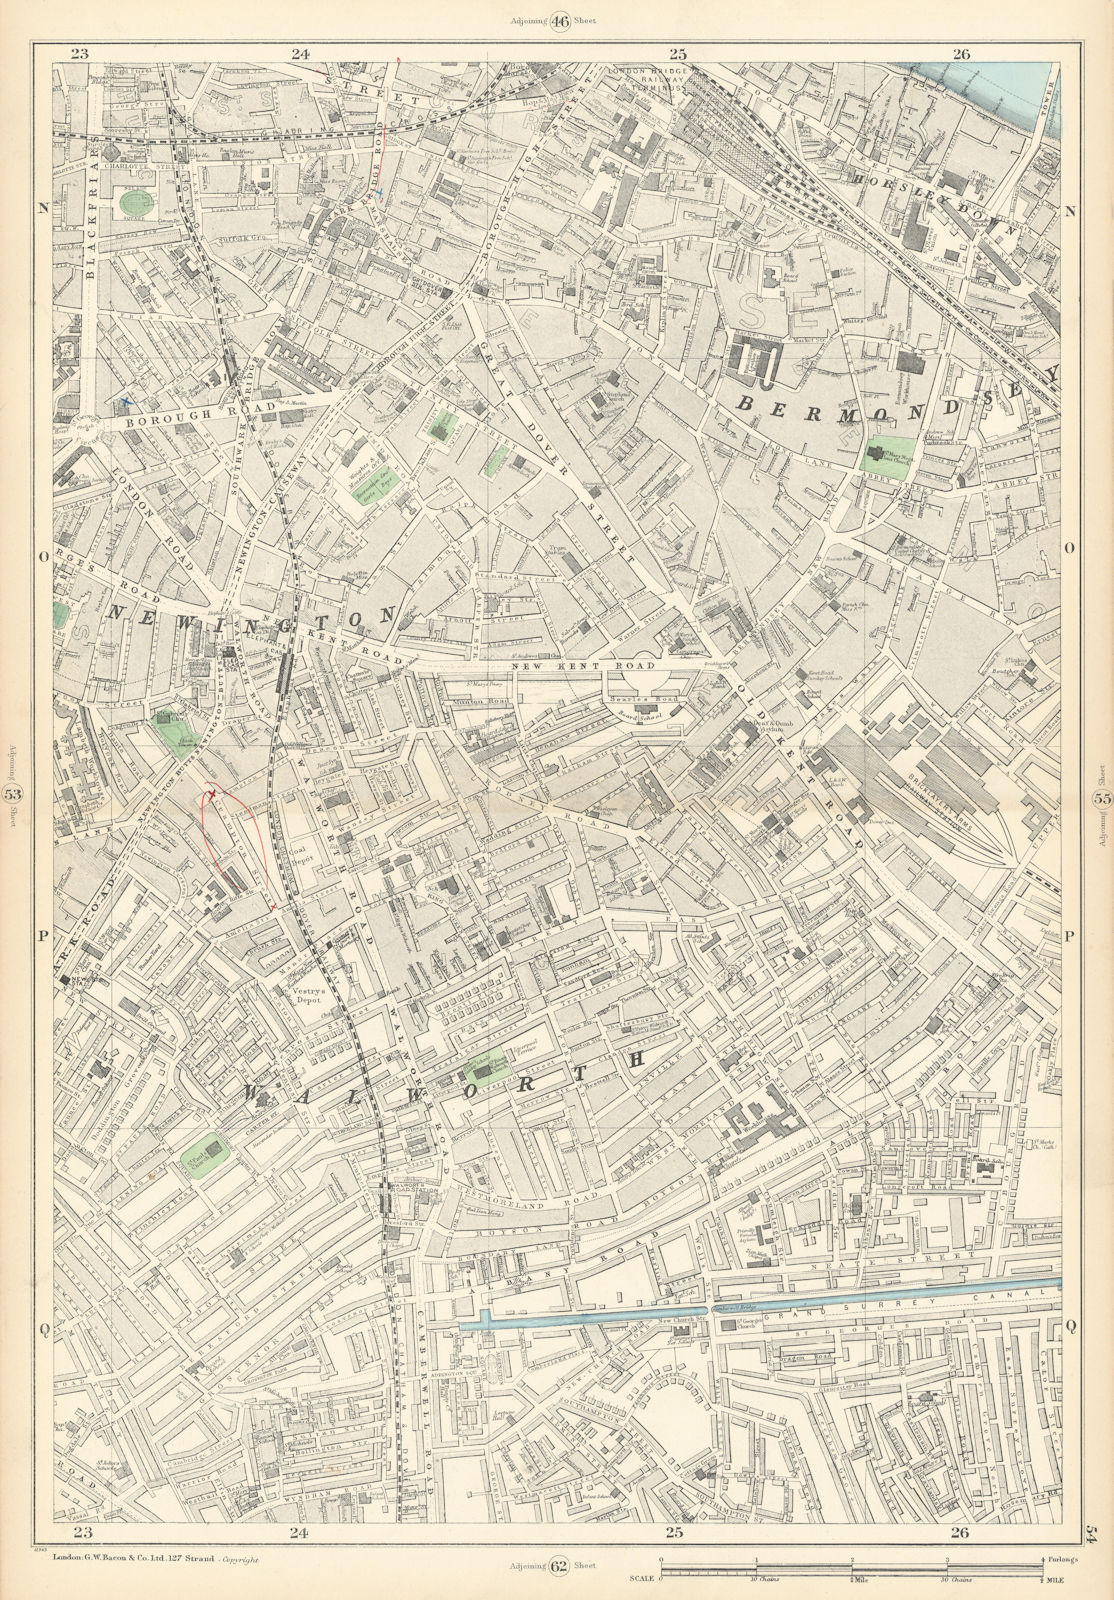 BERMONDSEY Newington Elephant & Castle Borough London Bridge Southwark 1900 map